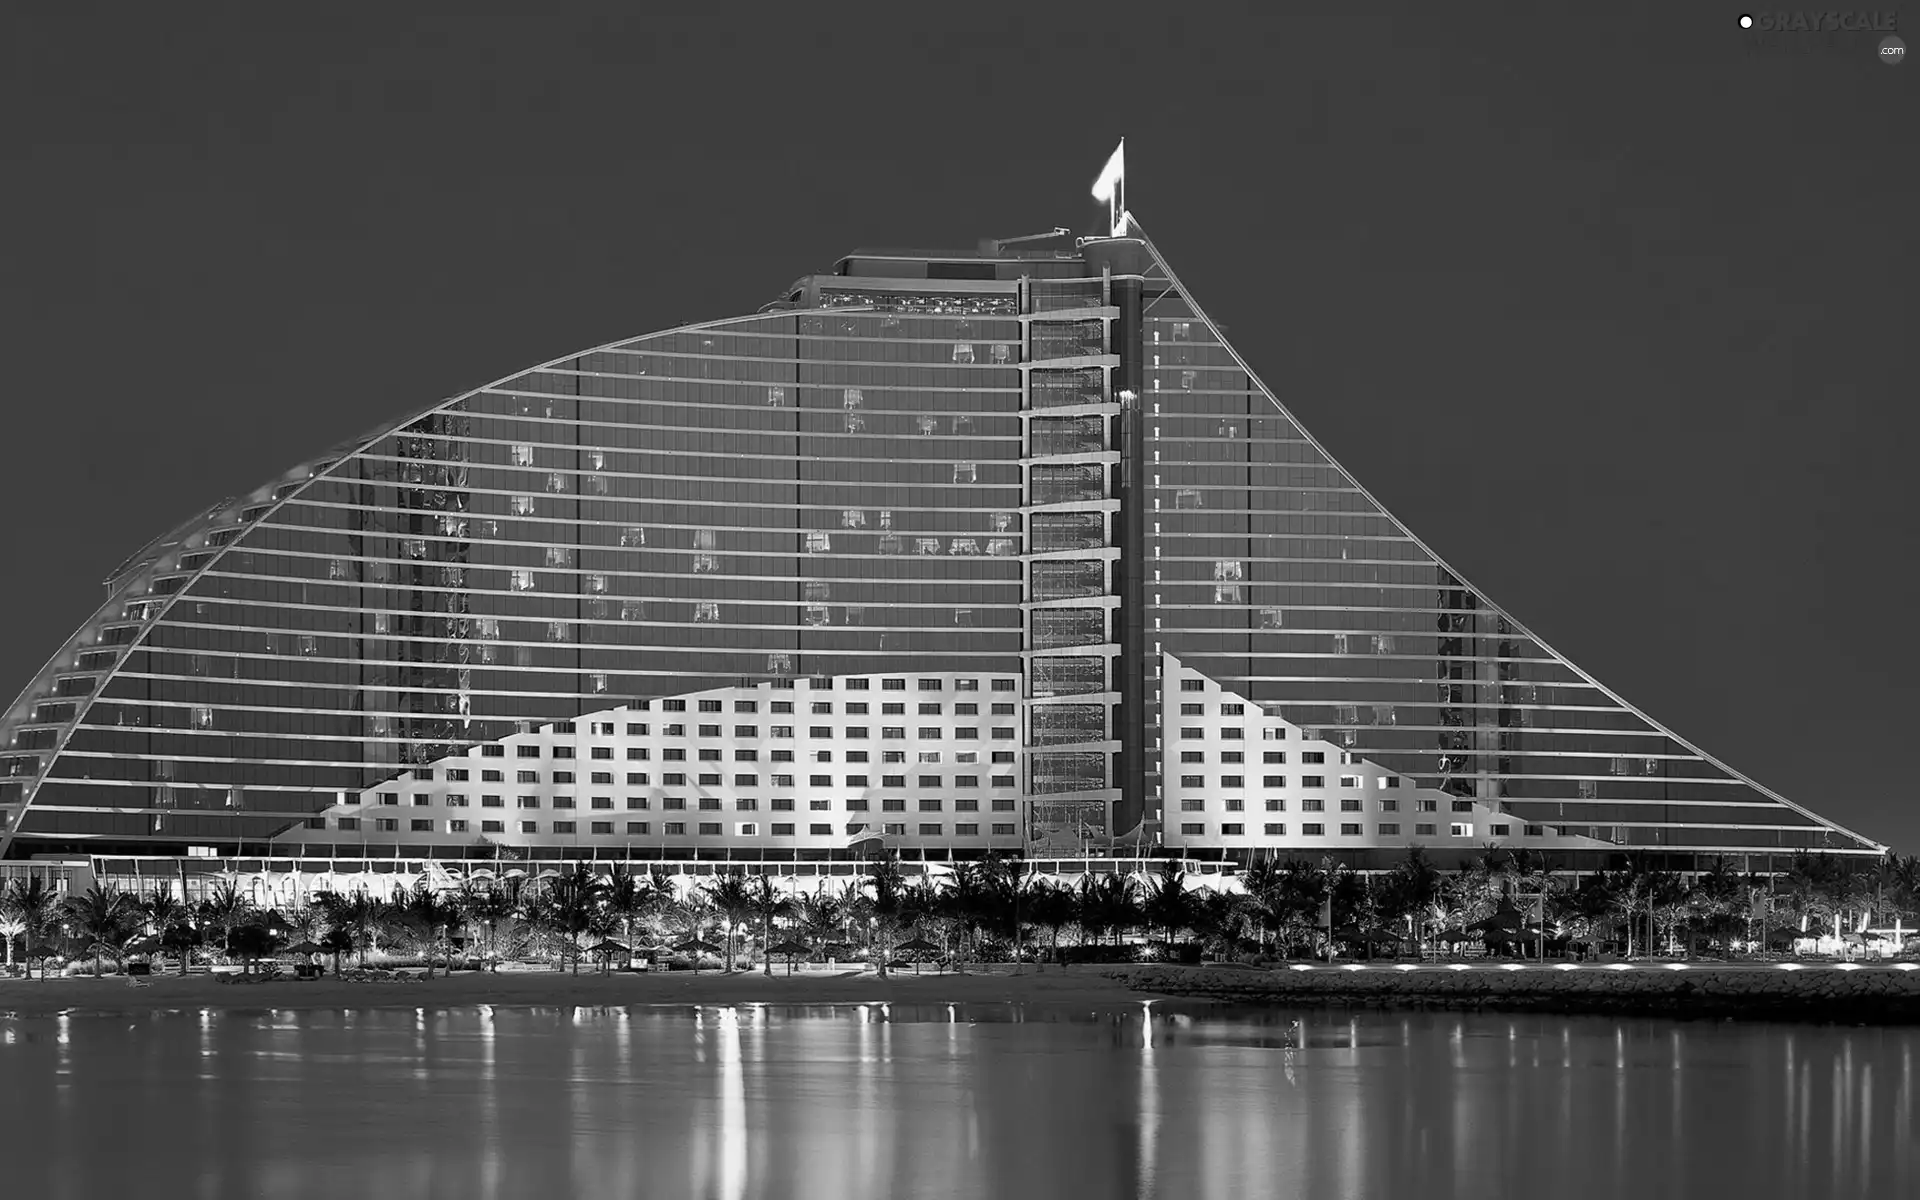 Jumeirah Beach Hotel, Dubaj